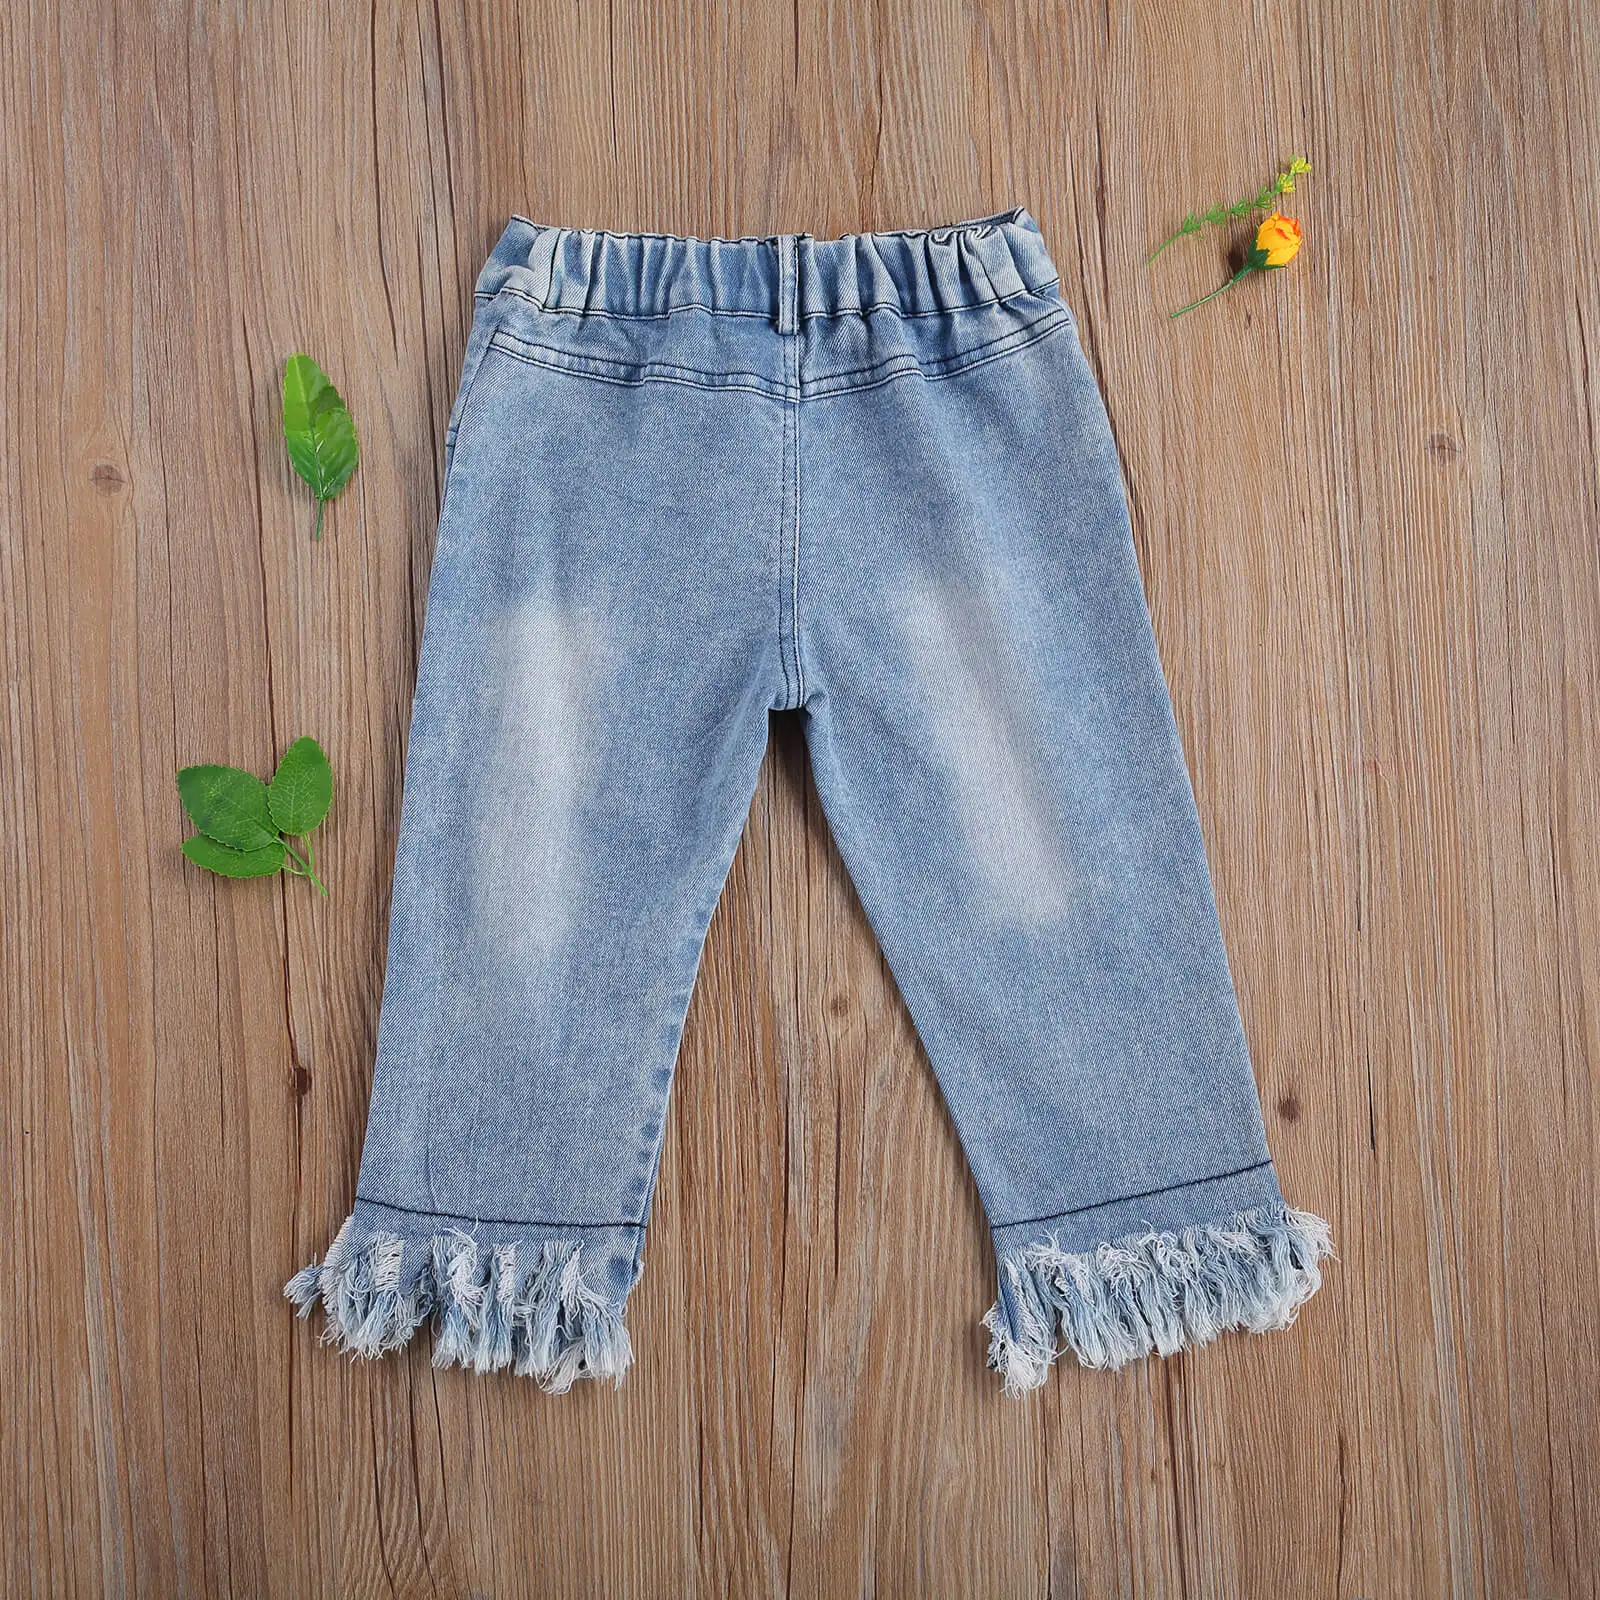 Lioraitiin Pige Bukser, Behagelig Elastisk Frynsede Jeans, Bukser til Børn Ferie fødselsdagsfest Ferie Fotografering